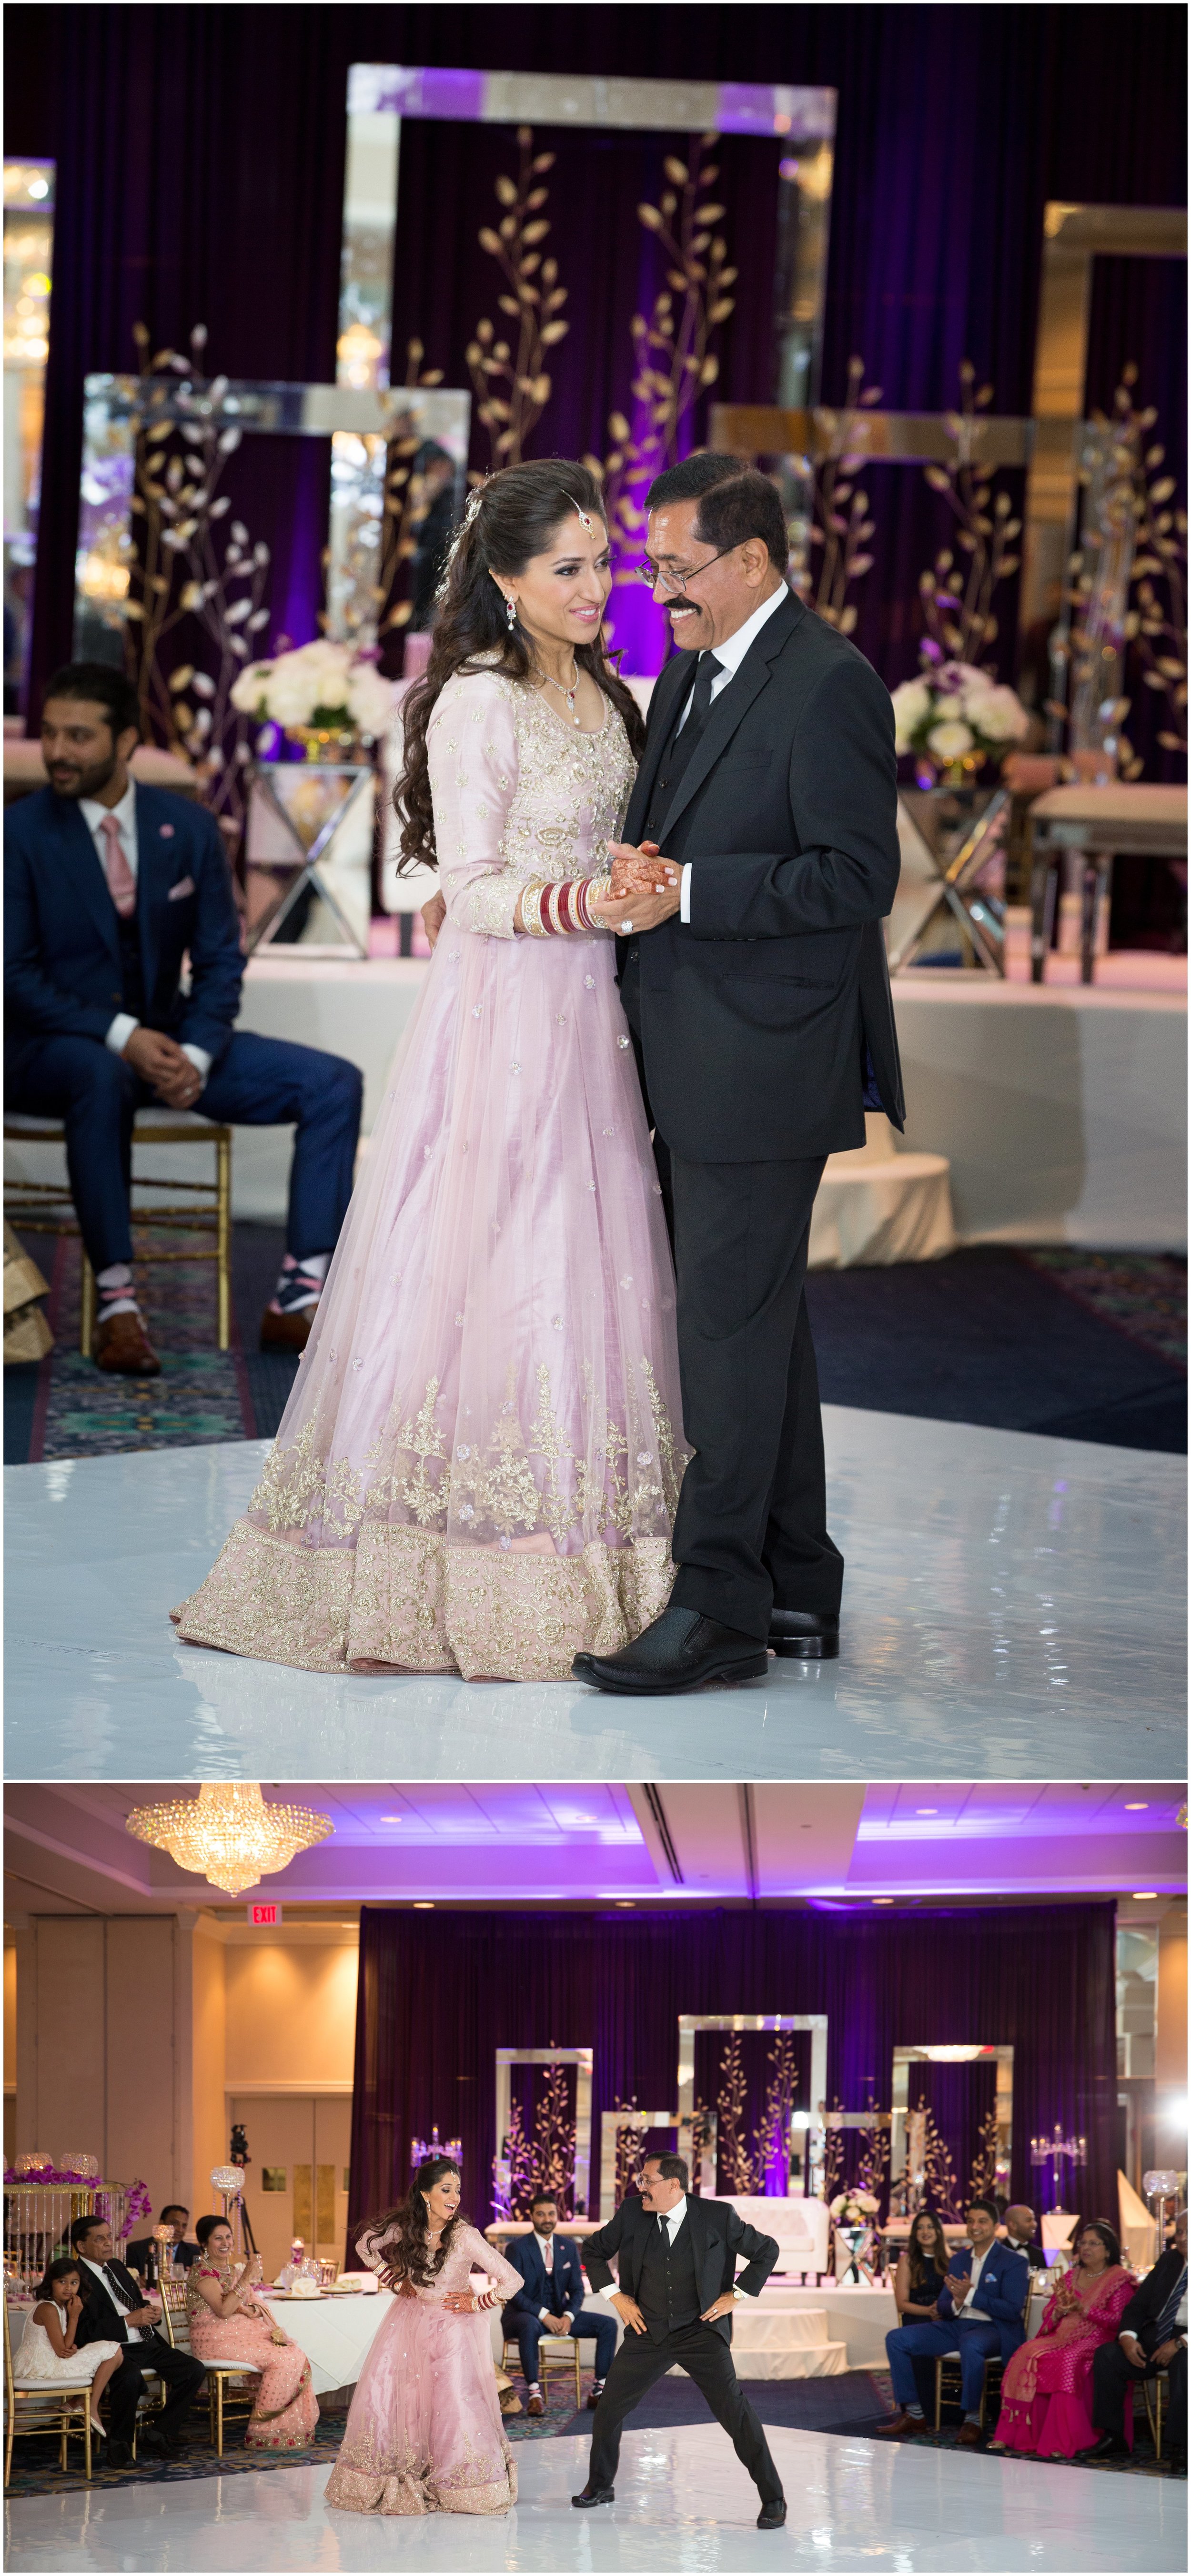 Le Cape Weddings - South Asian Wedding in Illinois - Tanvi and Anshul -0996_LuxuryDestinationPhotographer.jpg